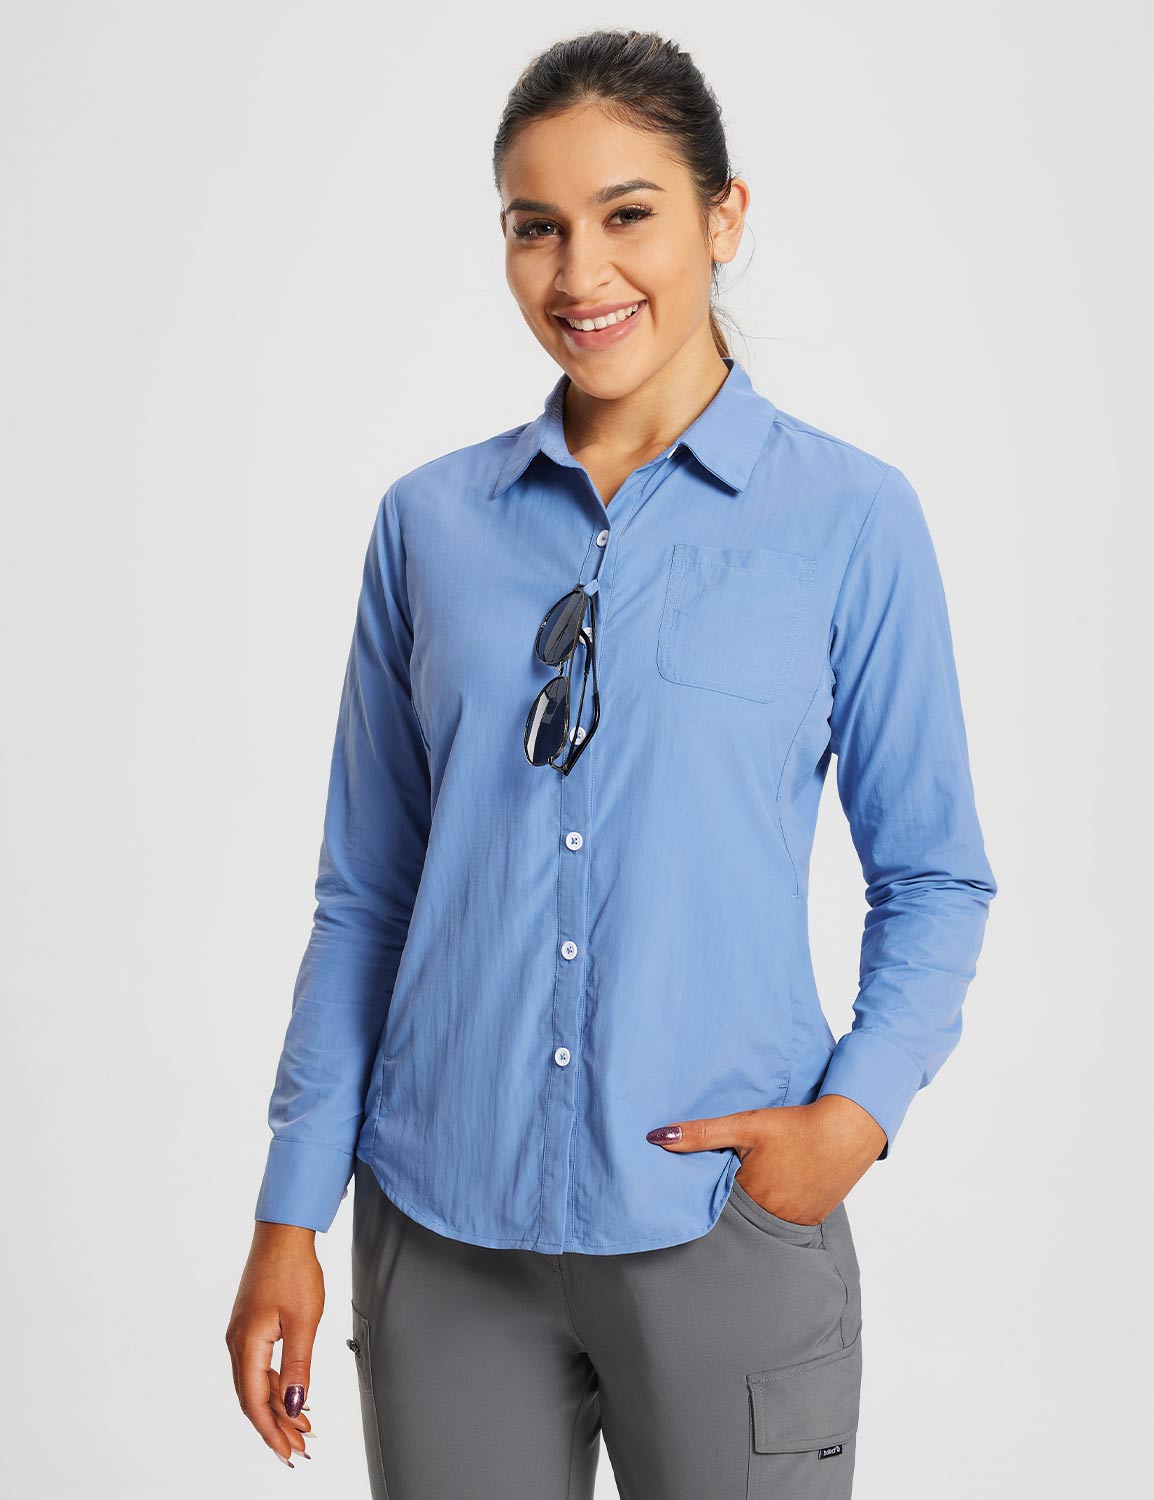 Baleaf Women's Quick-Dry UPF 50+ Sun Shirts Ashleigh Blue Main